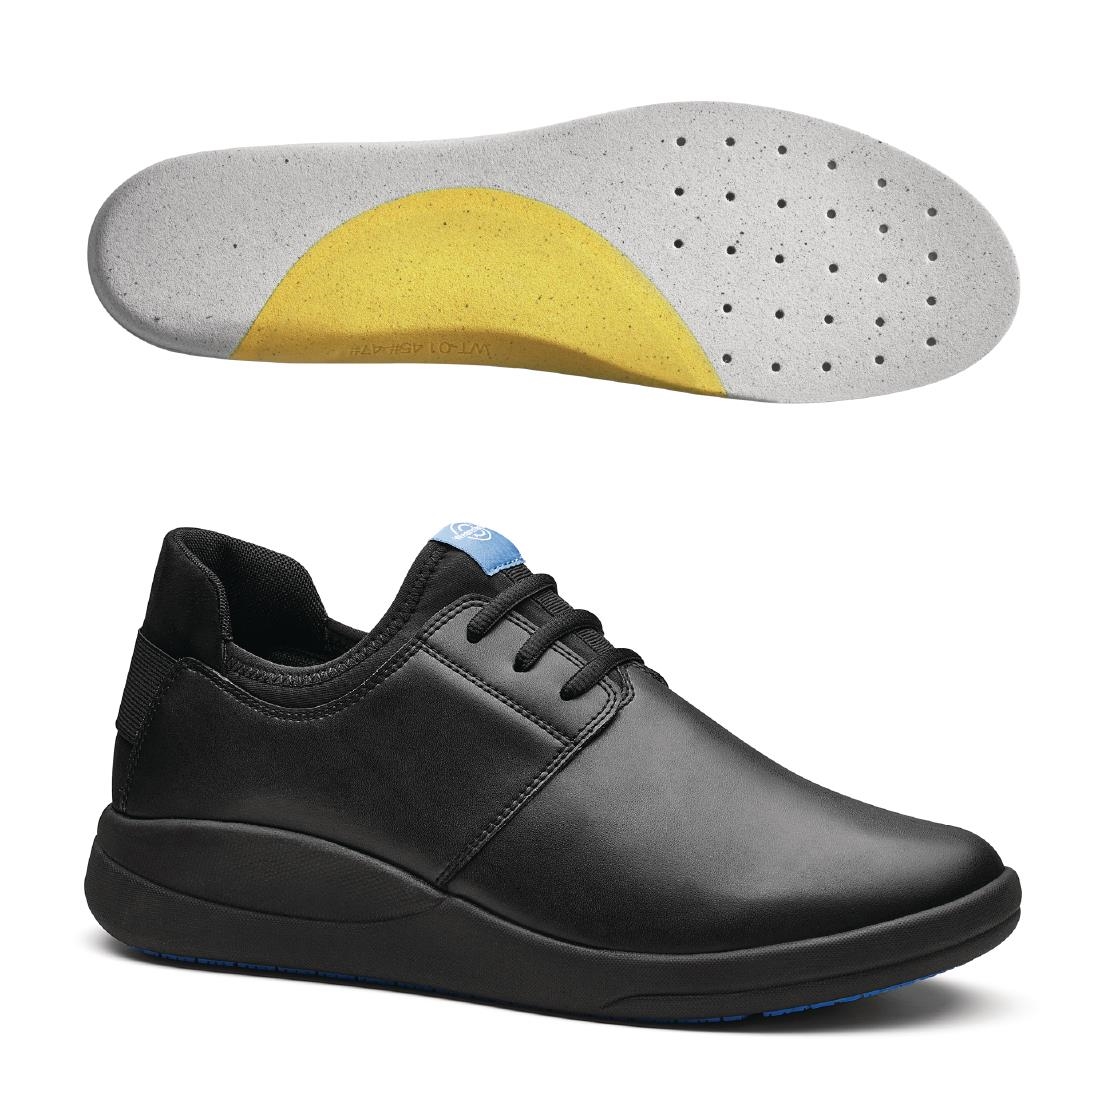 WearerTech Relieve Shoe Black with Soft Insoles Size 46